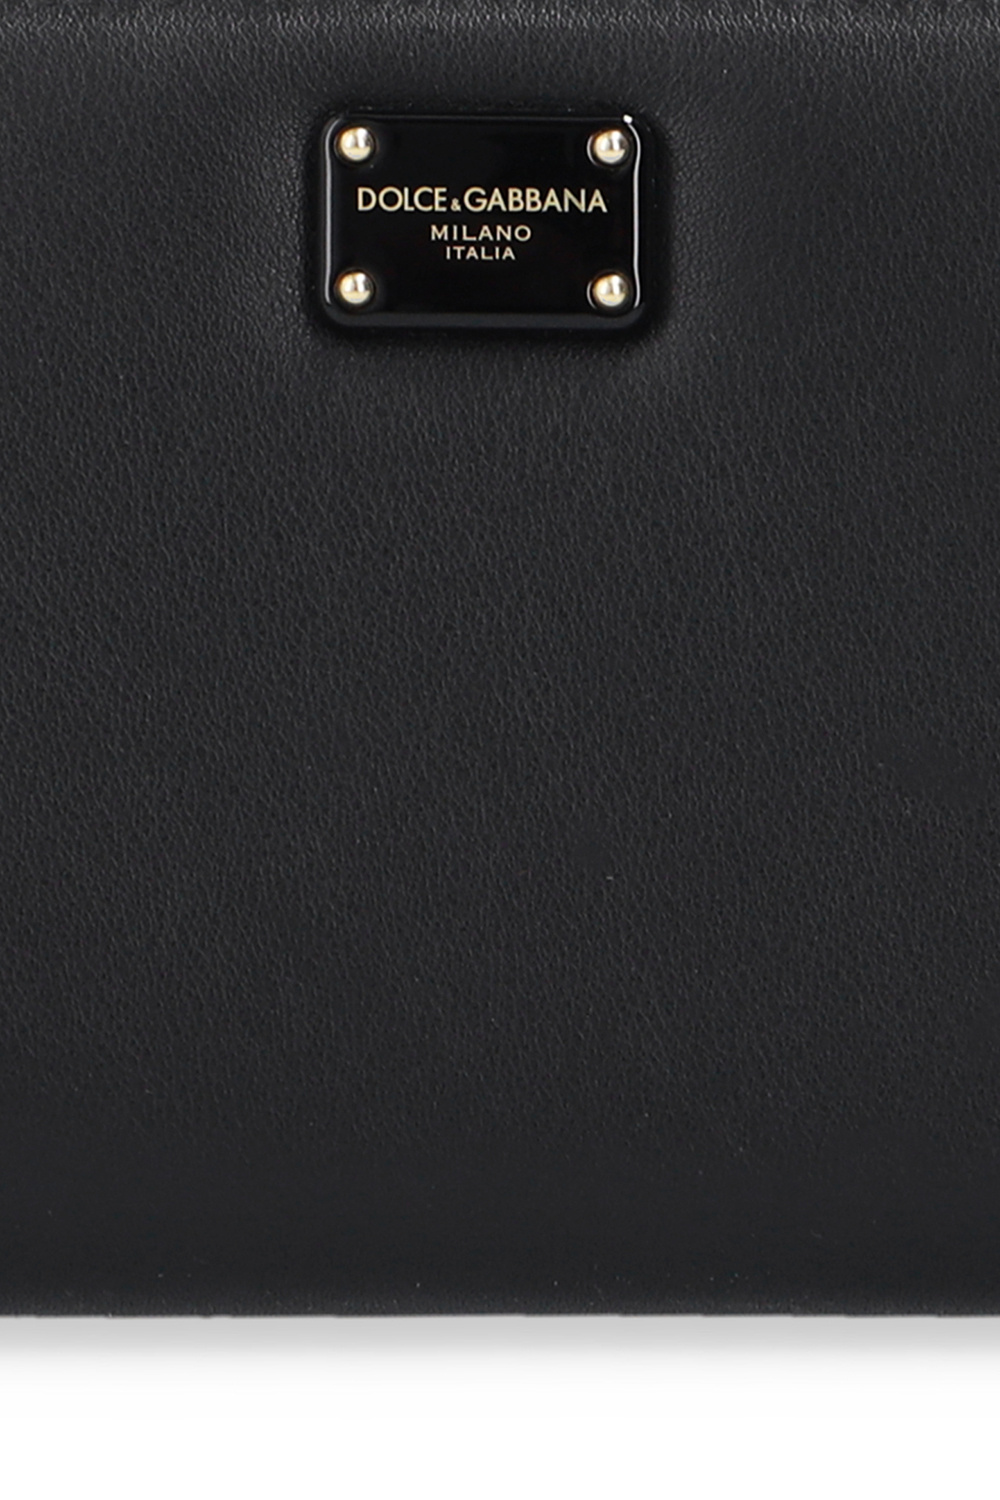 Dolce & Gabbana metallic-effect leggings Wallet with logo